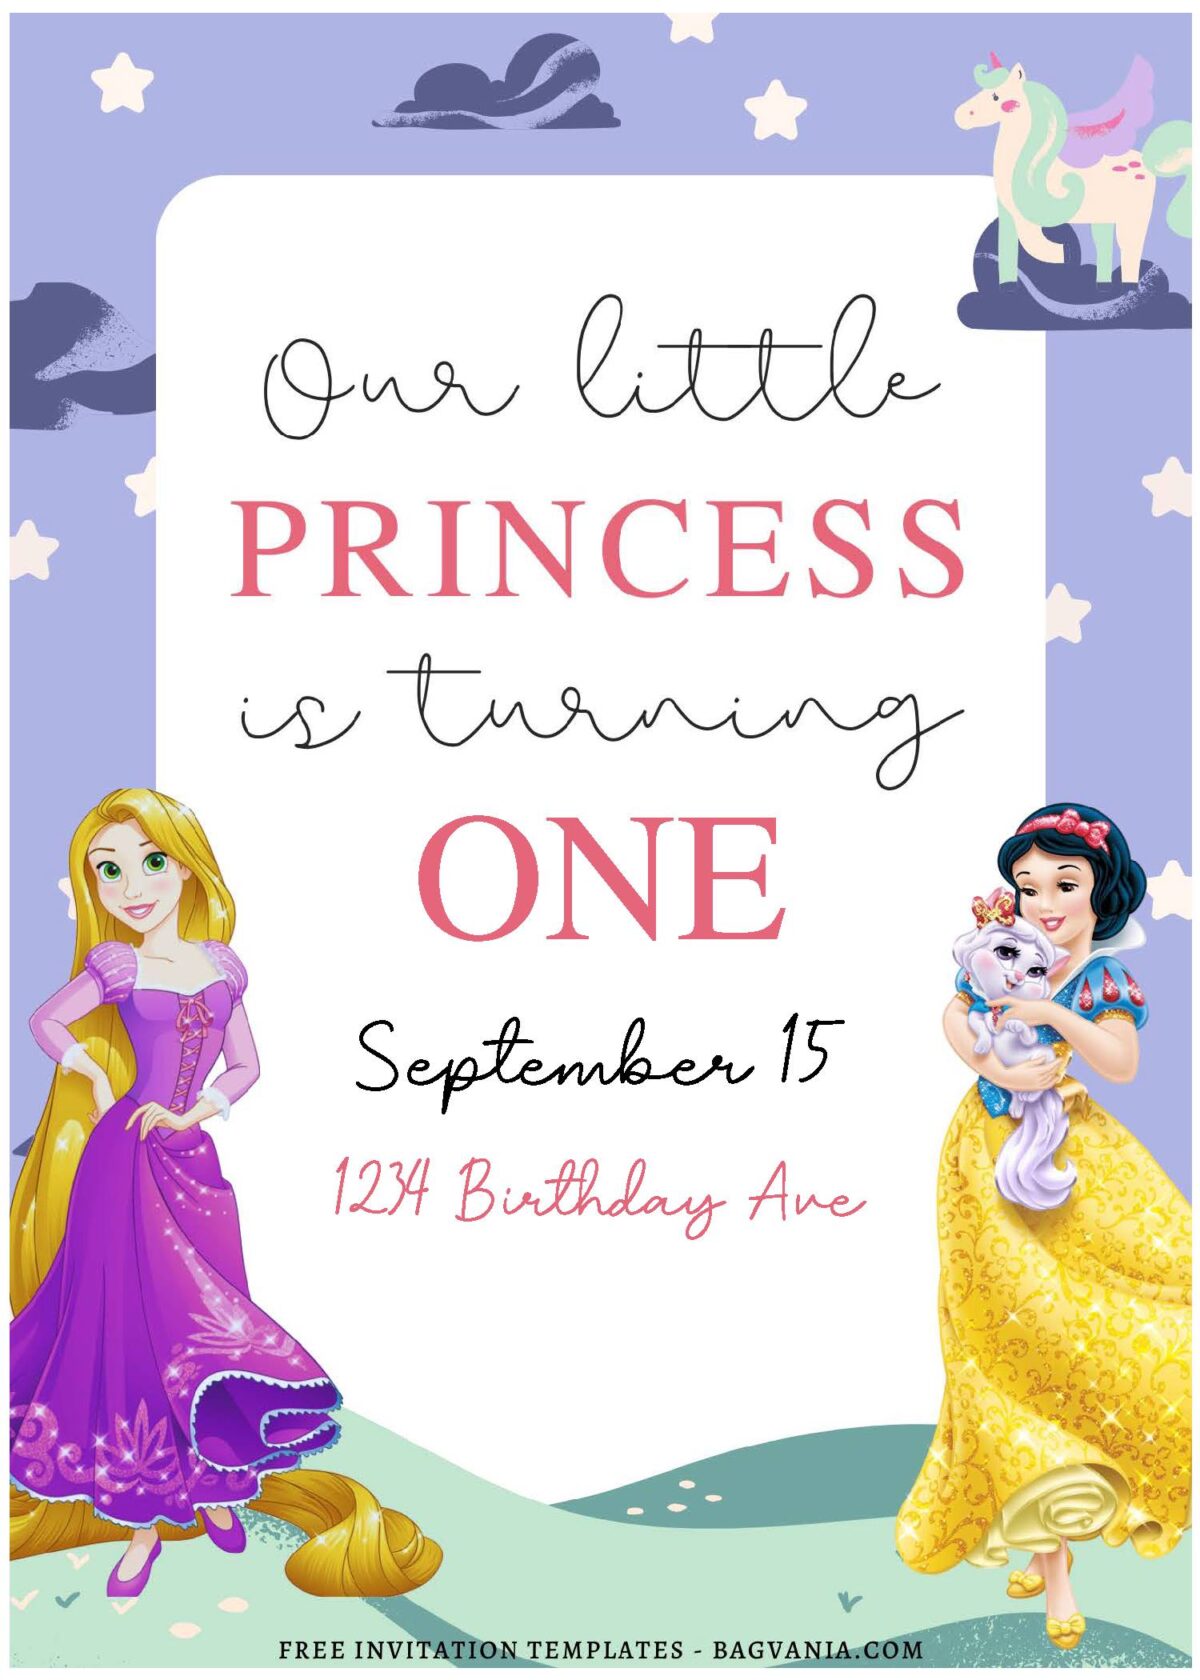 (Free Editable PDF) Magical Disney Princess Birthday Invitation Templates A